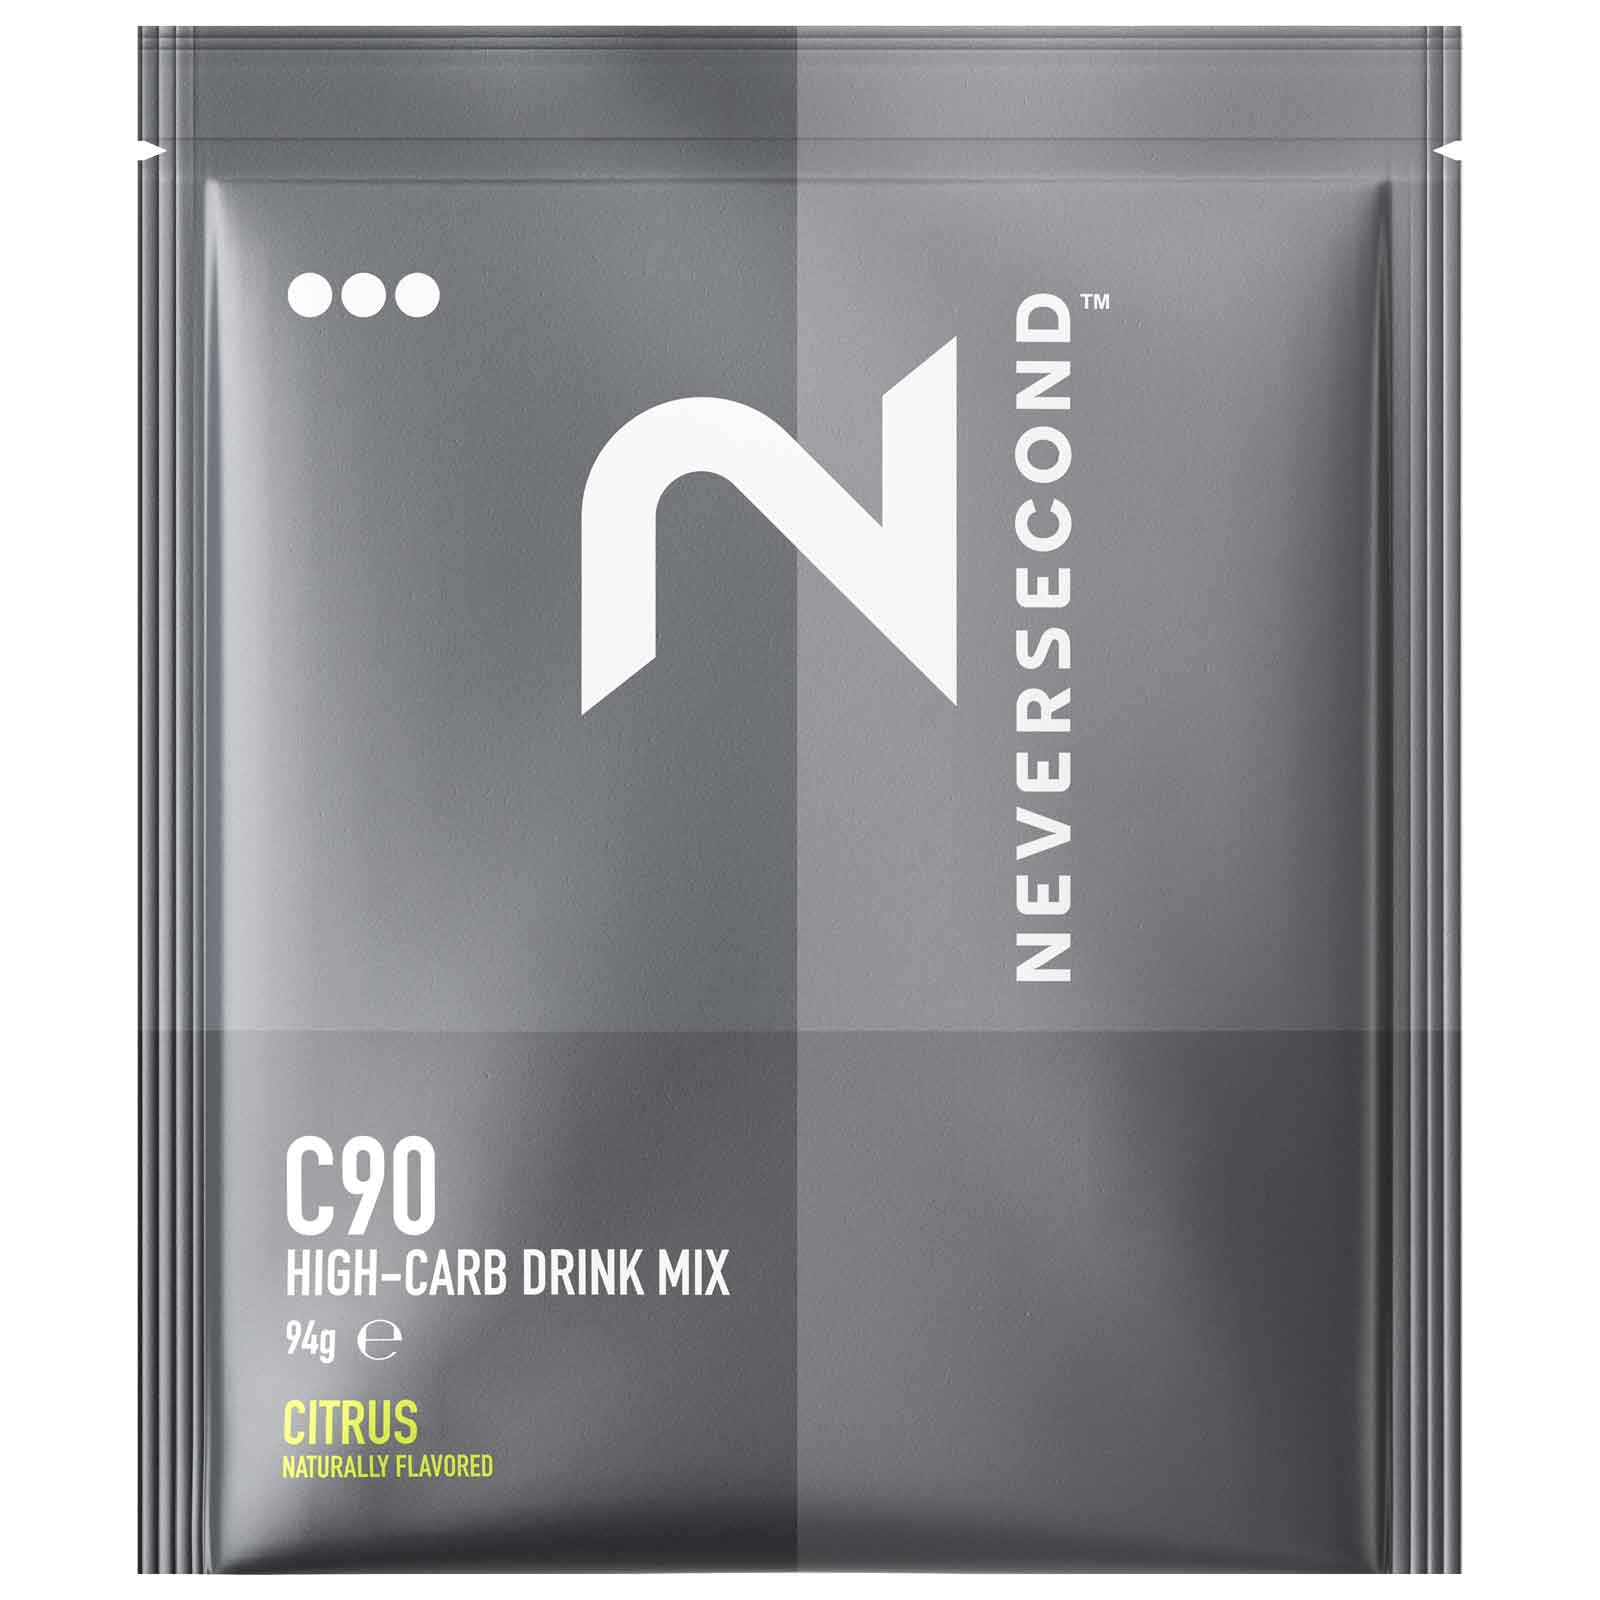 Productfoto van Neversecond C90 High Carb Mix - Beverage Powder - 94g